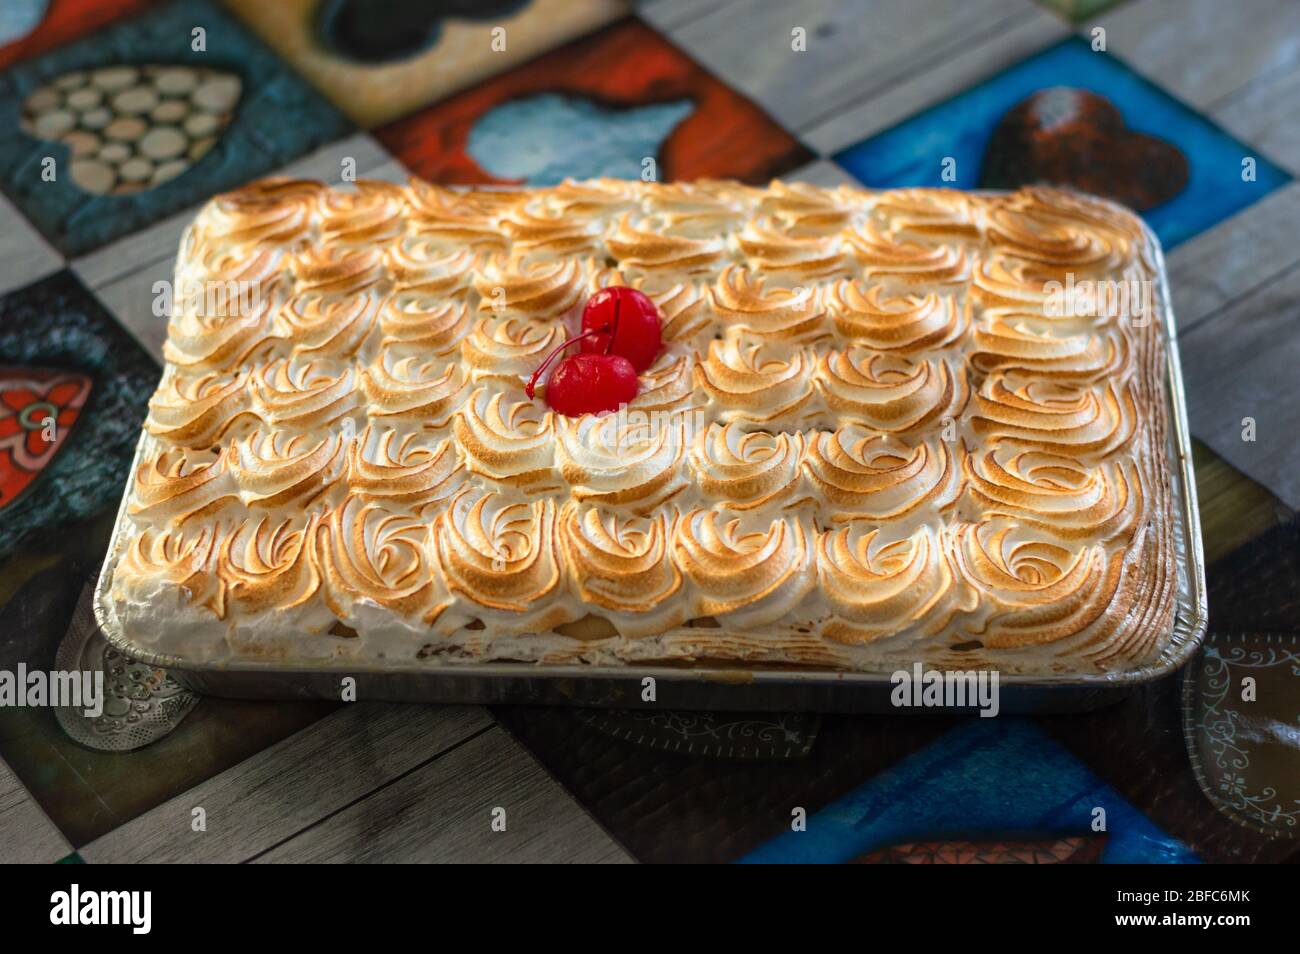 Tres leches cake, popular dessert in Latin America. Stock Photo